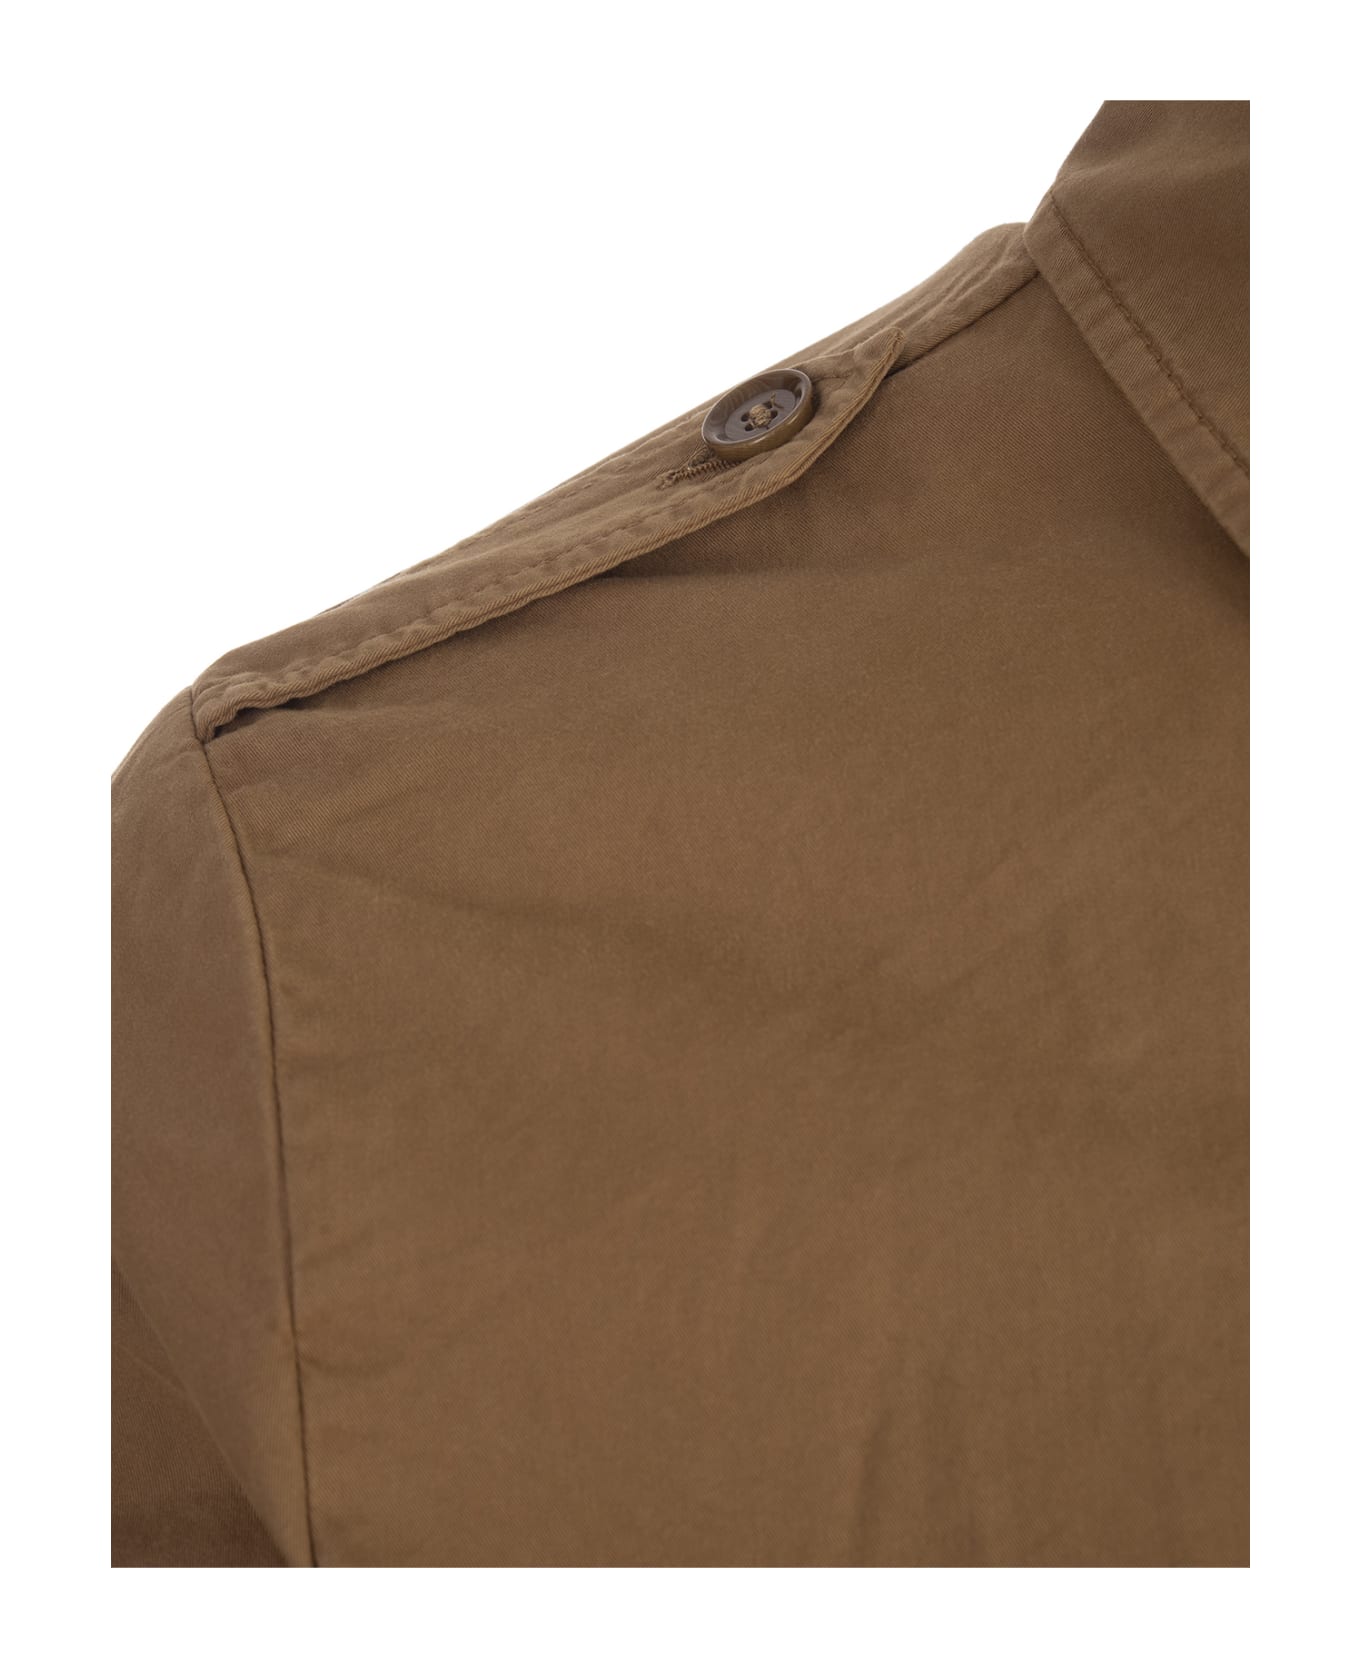 Aspesi Light Brown Cotton Gabardine Military Shirt - Brown シャツ